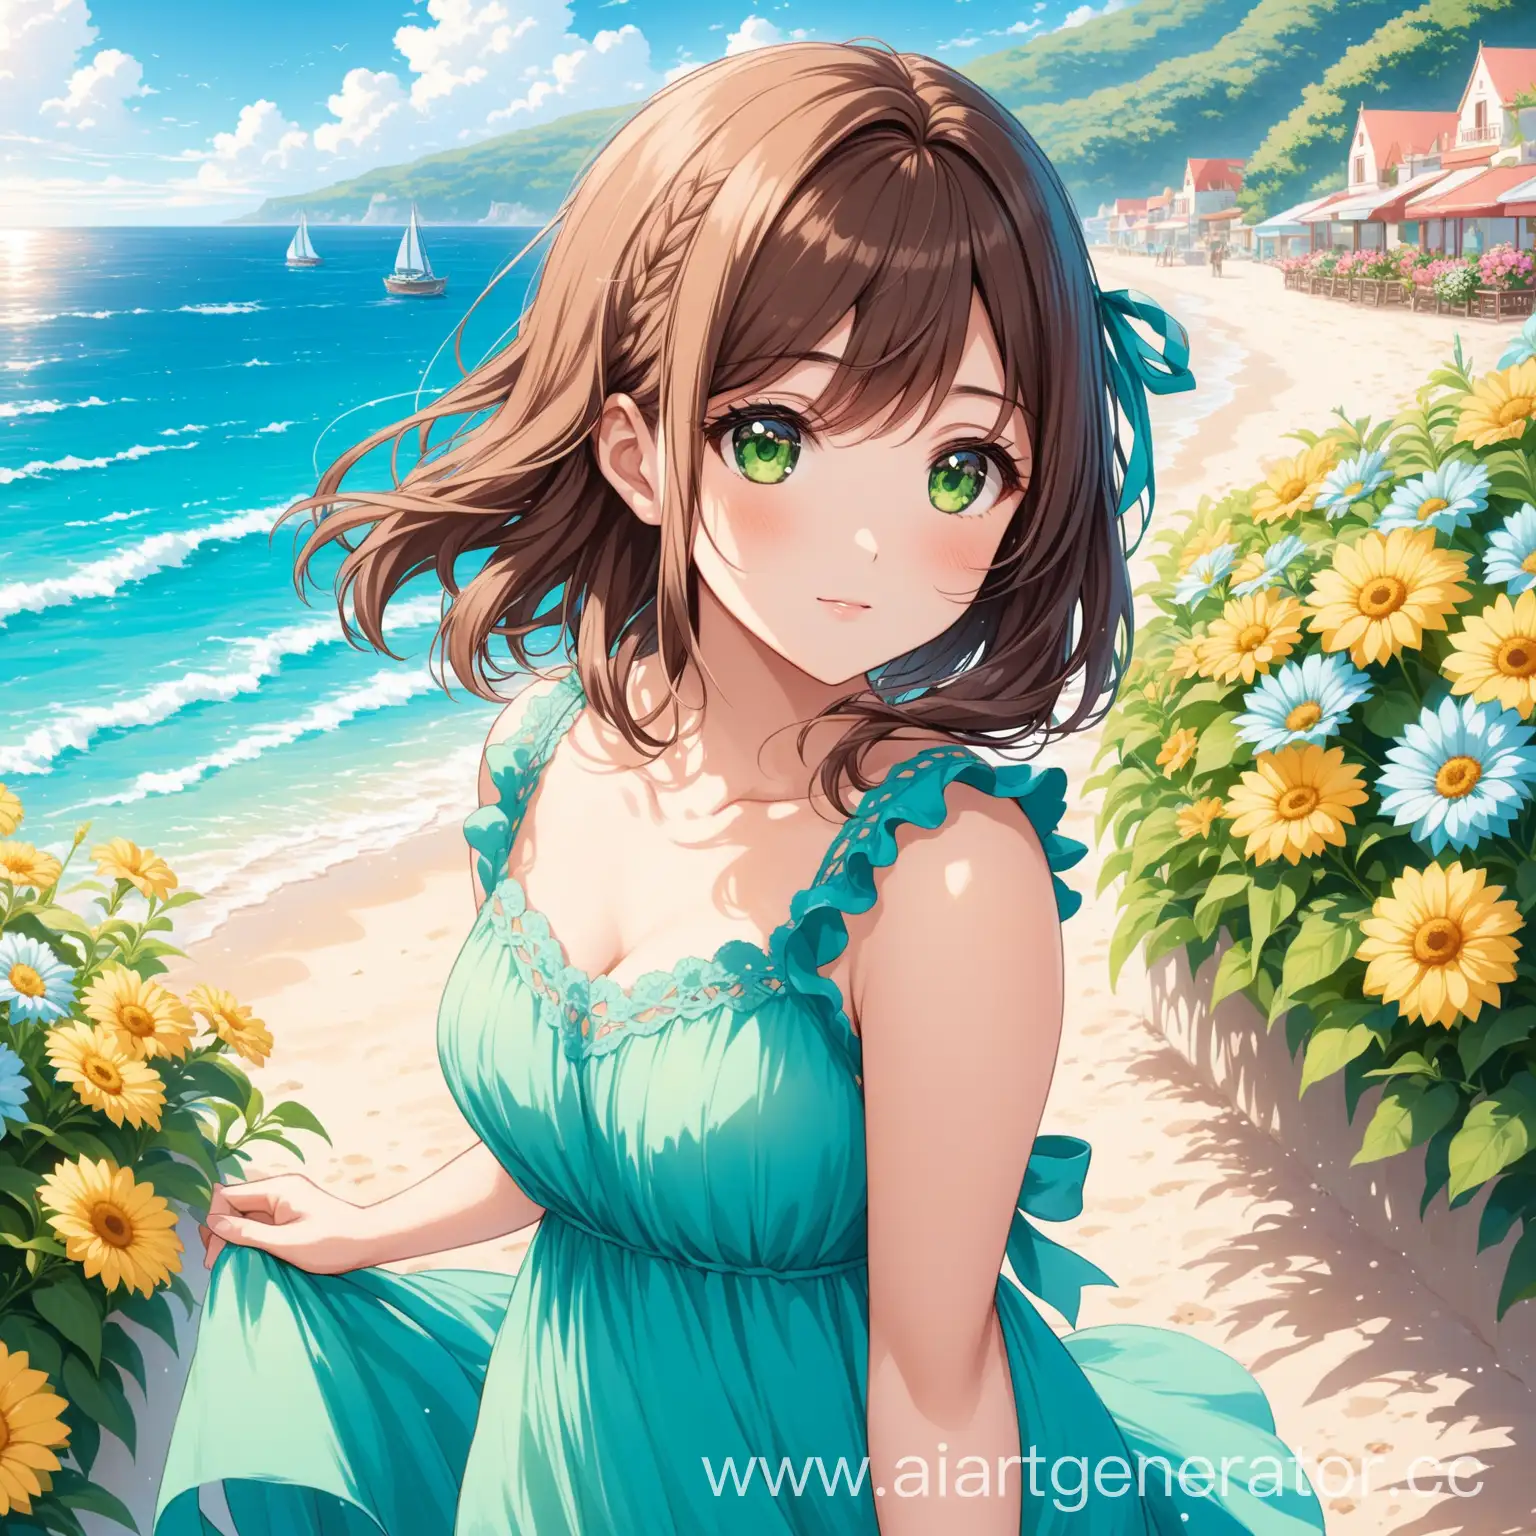 Aria-Roscente-Enjoying-Coastal-Breeze-in-Blue-Summer-Dress-Amidst-Blooming-Flowers